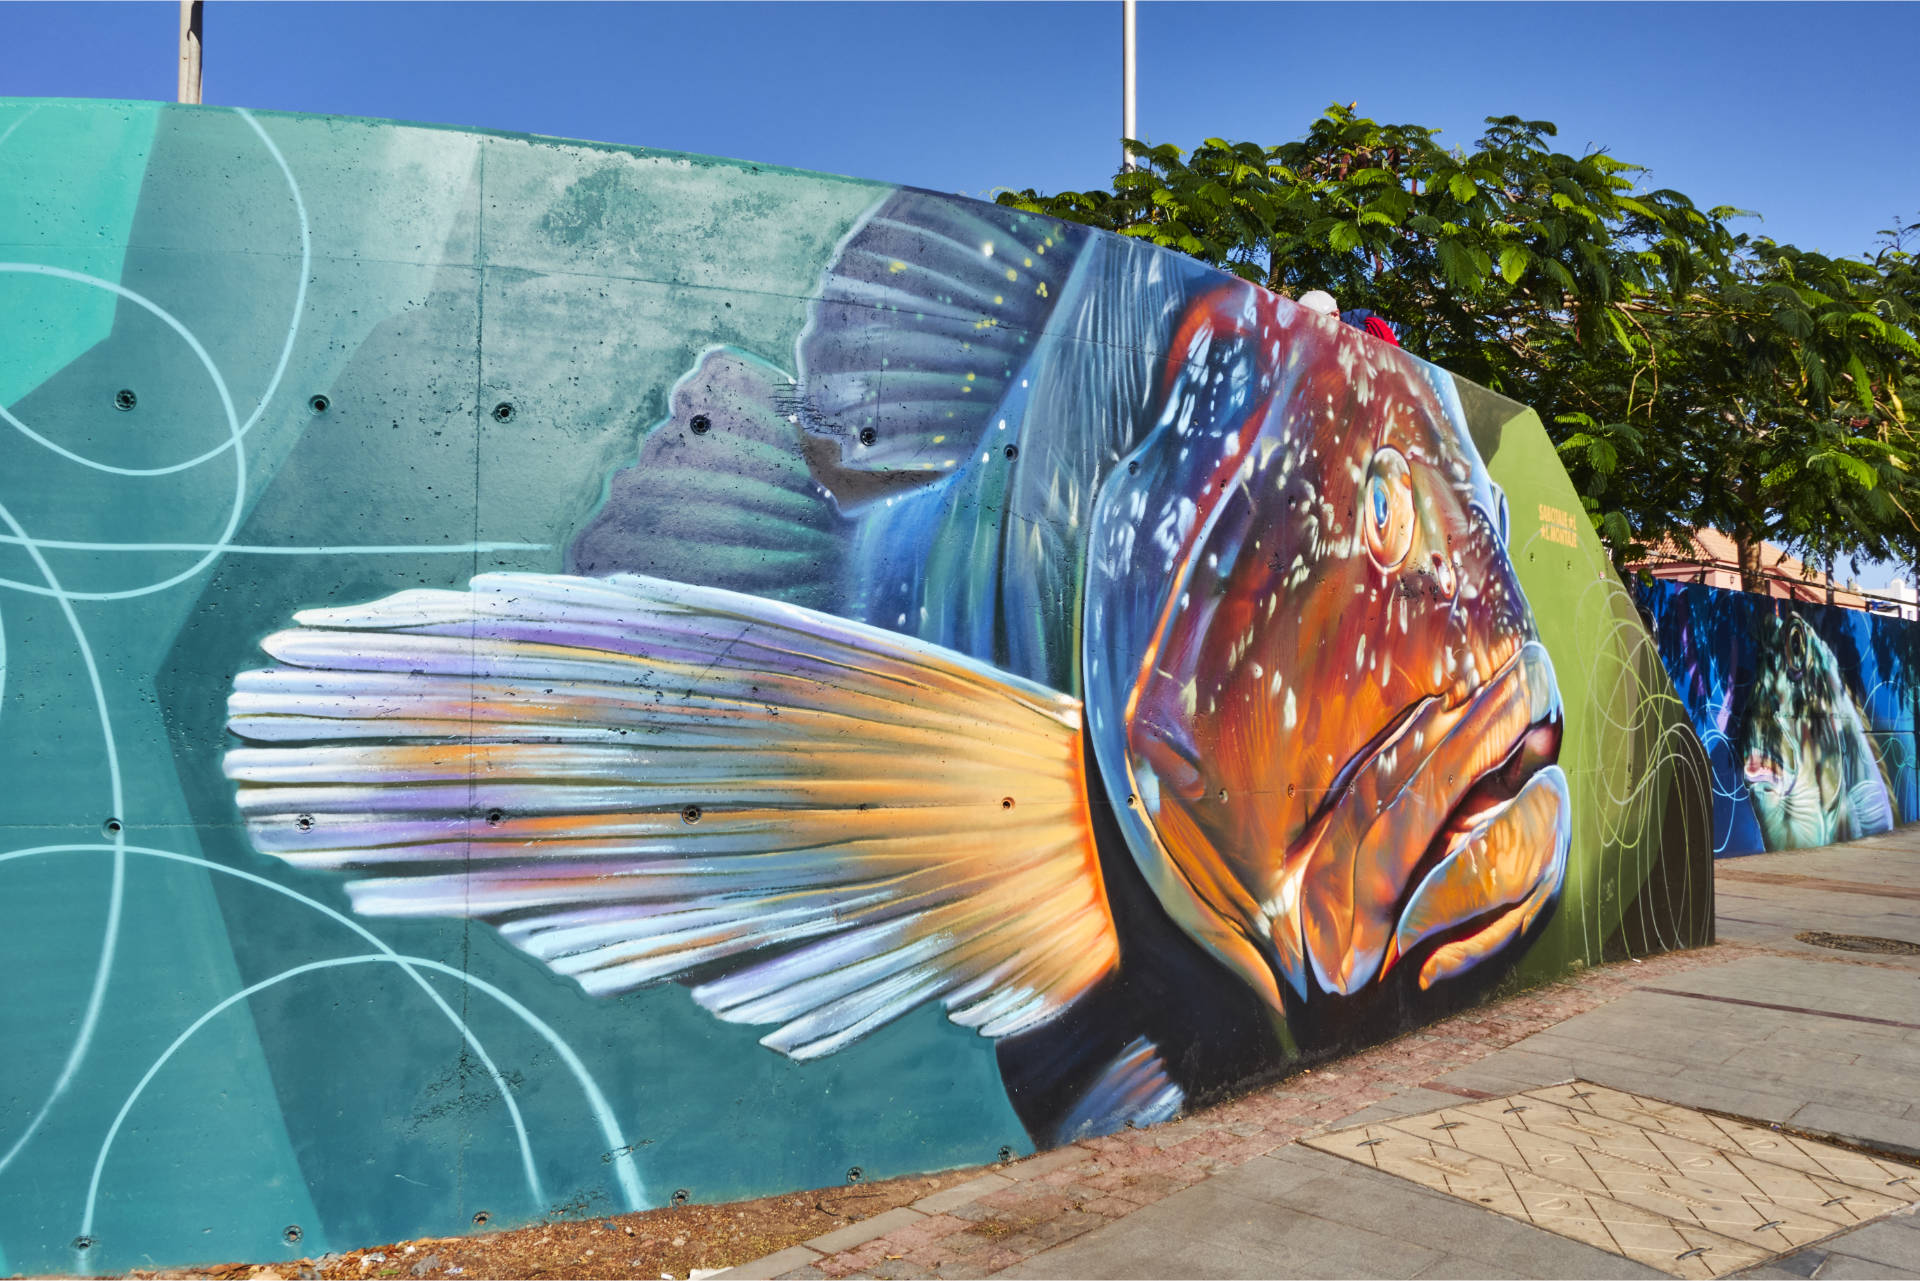 Street Art Projekt Mar, Tierra y Aire de Fuerteventura – Matías Mata Garcia aka Sabotaje al Montaje.